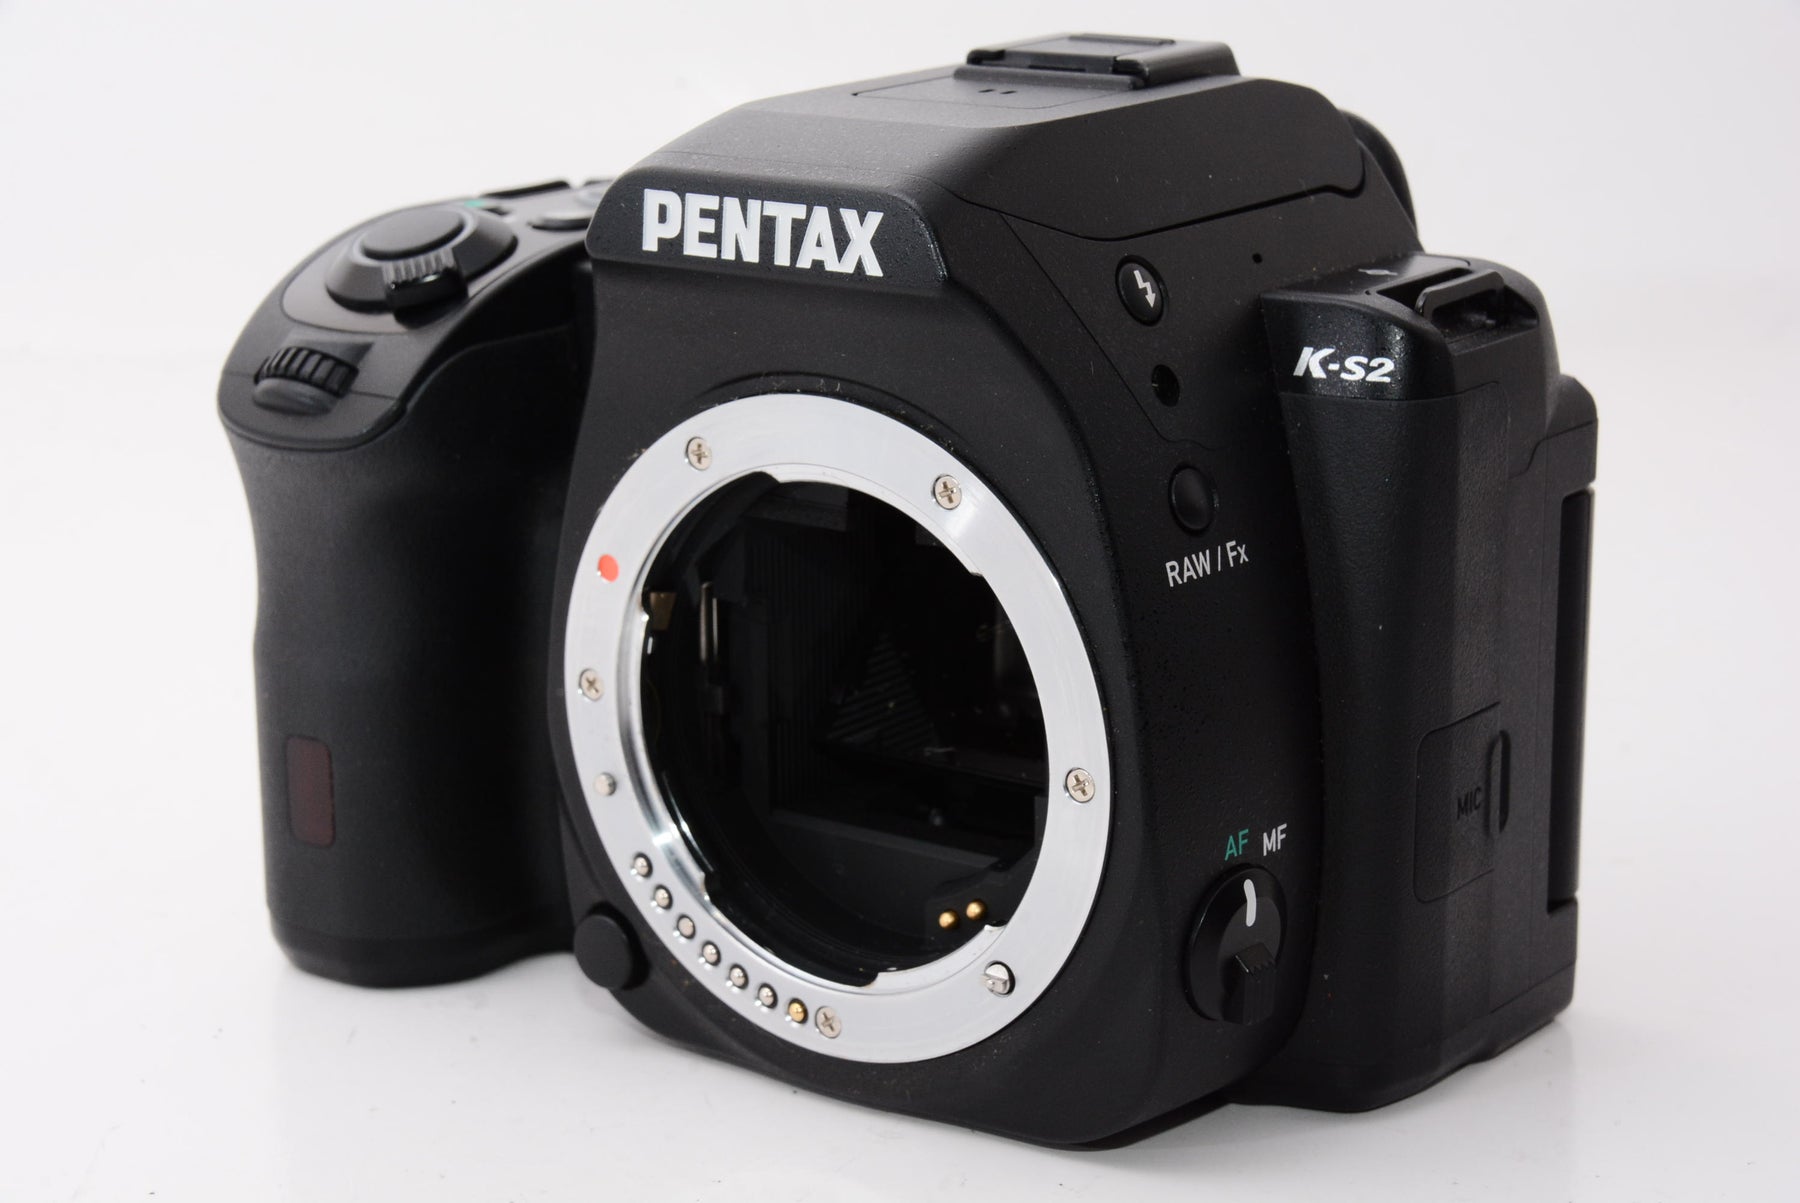 PENTAX ペンタックス K-S2 ボディ シャッター数108 - デジタルカメラ